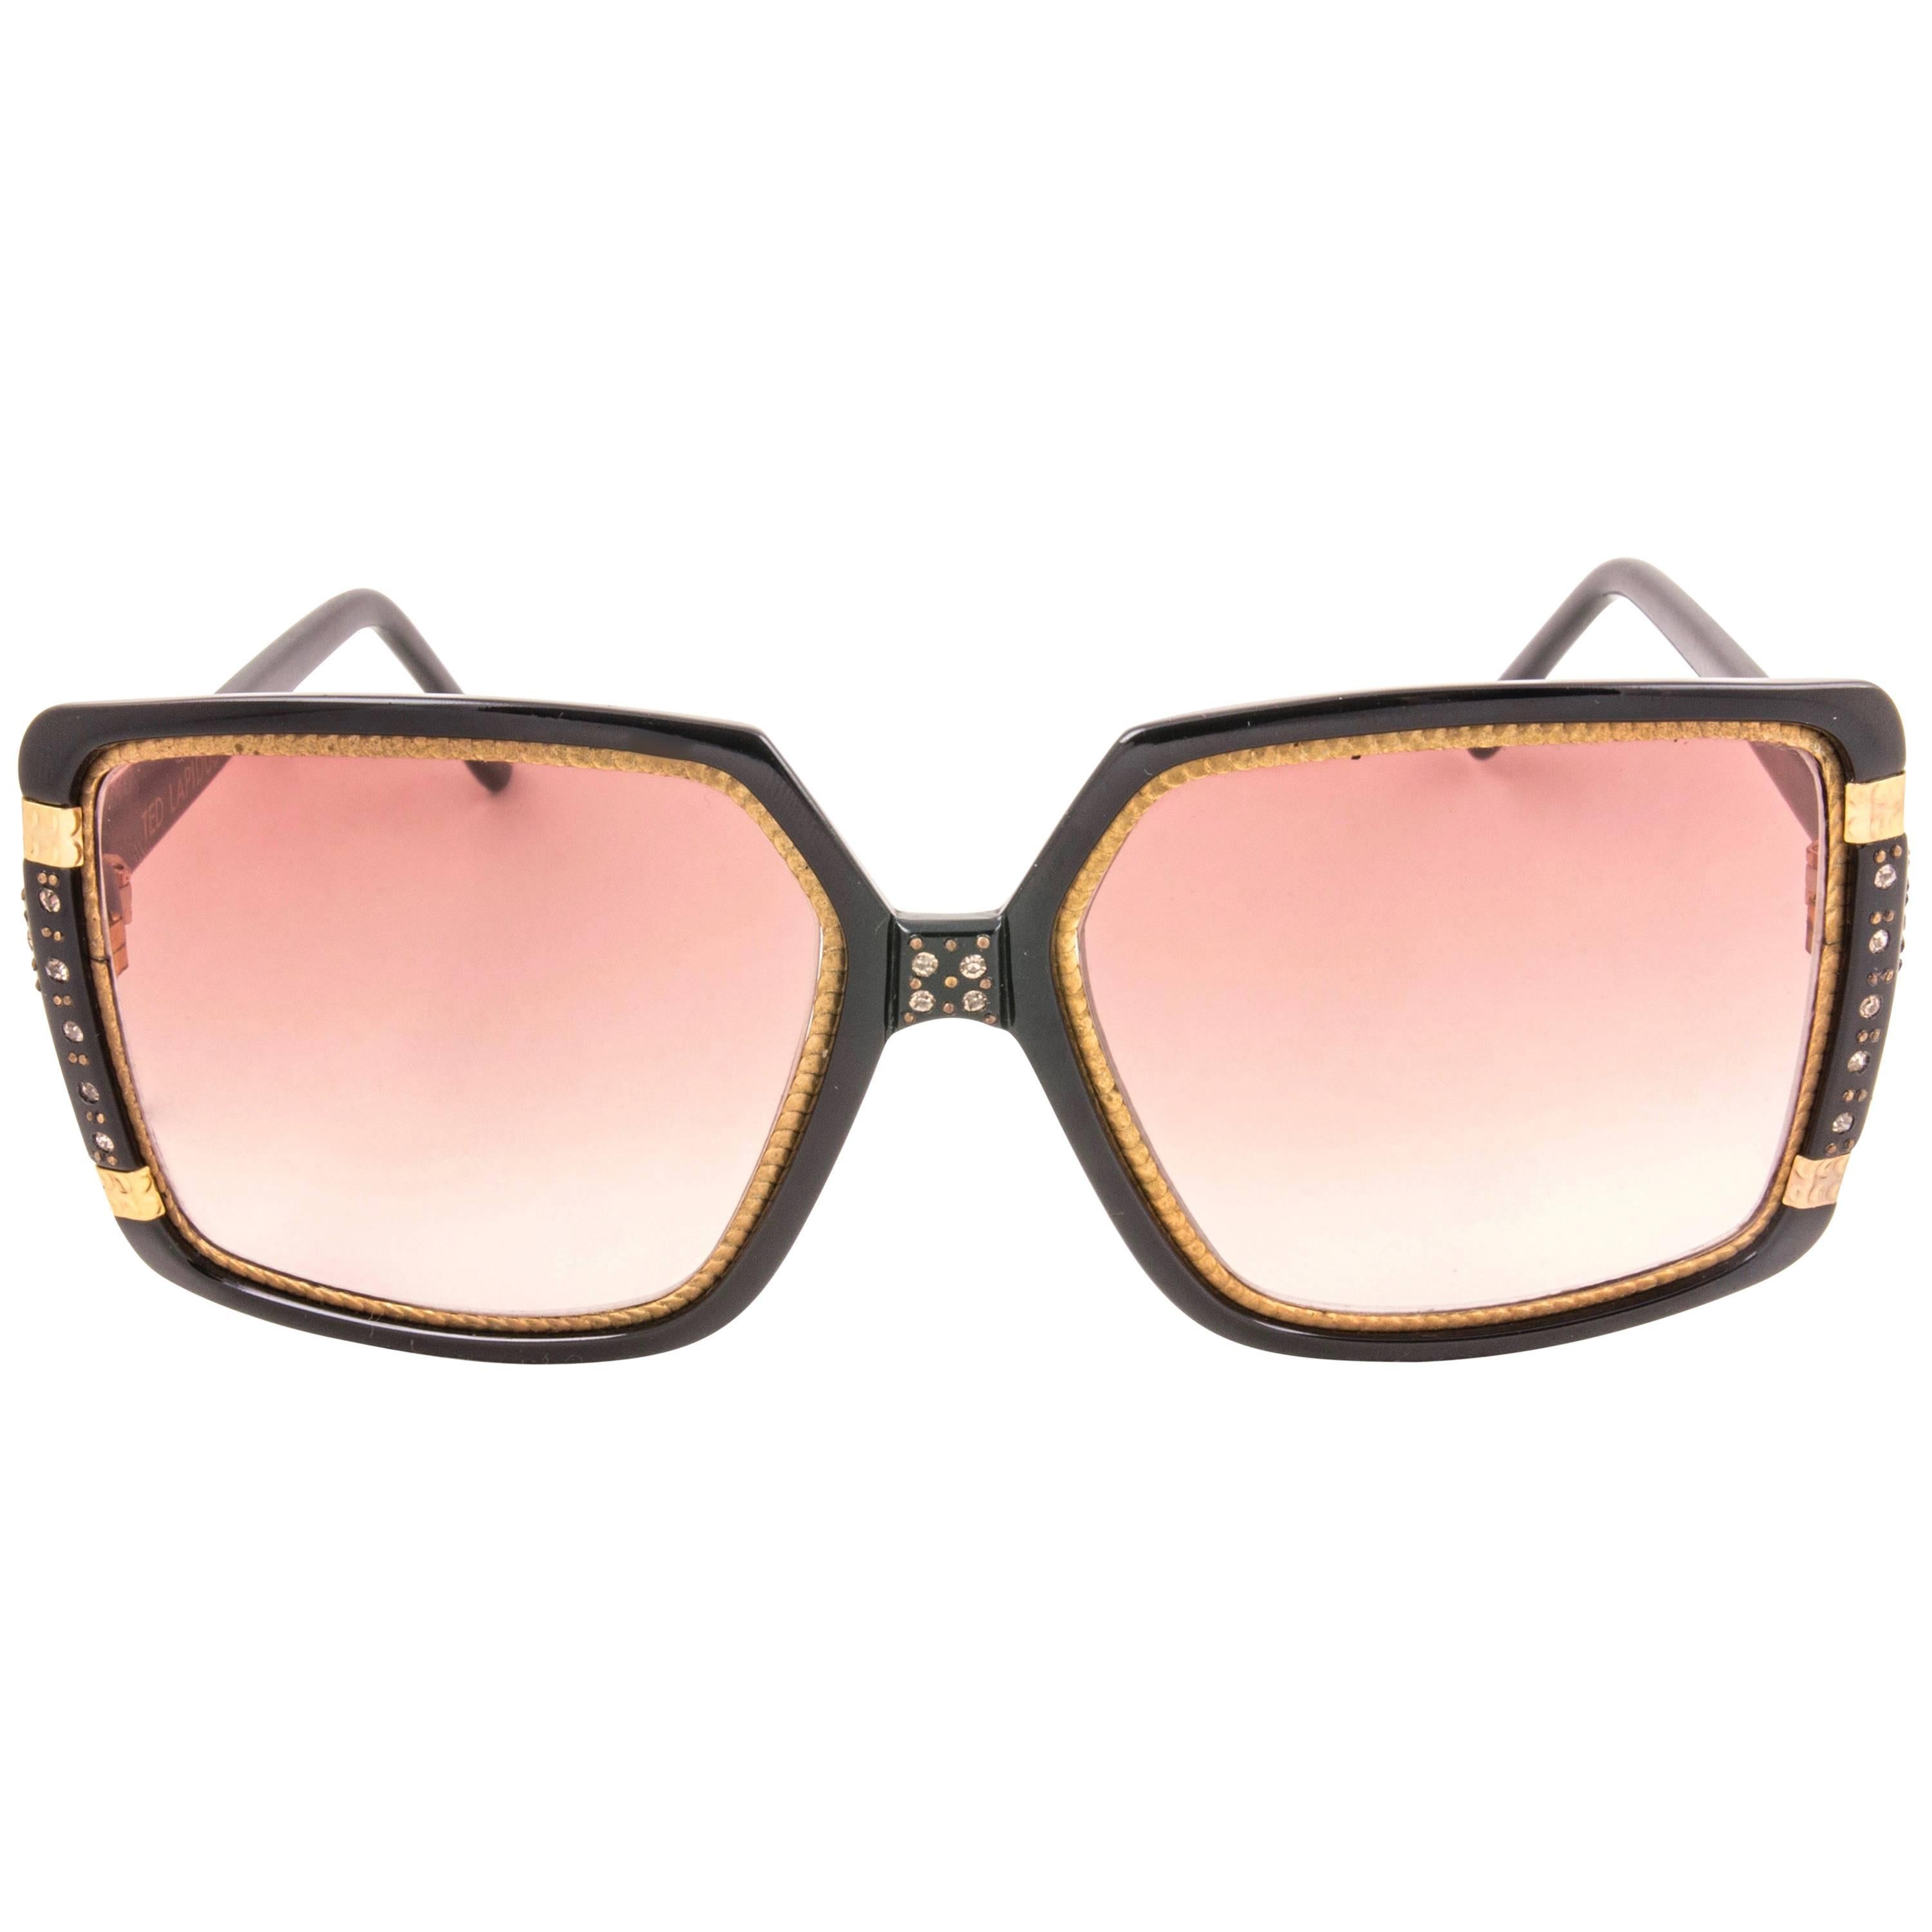 New Vintage Ted Lapidus Paris TL Strass Accents Gold Black 1970 Sunglasses